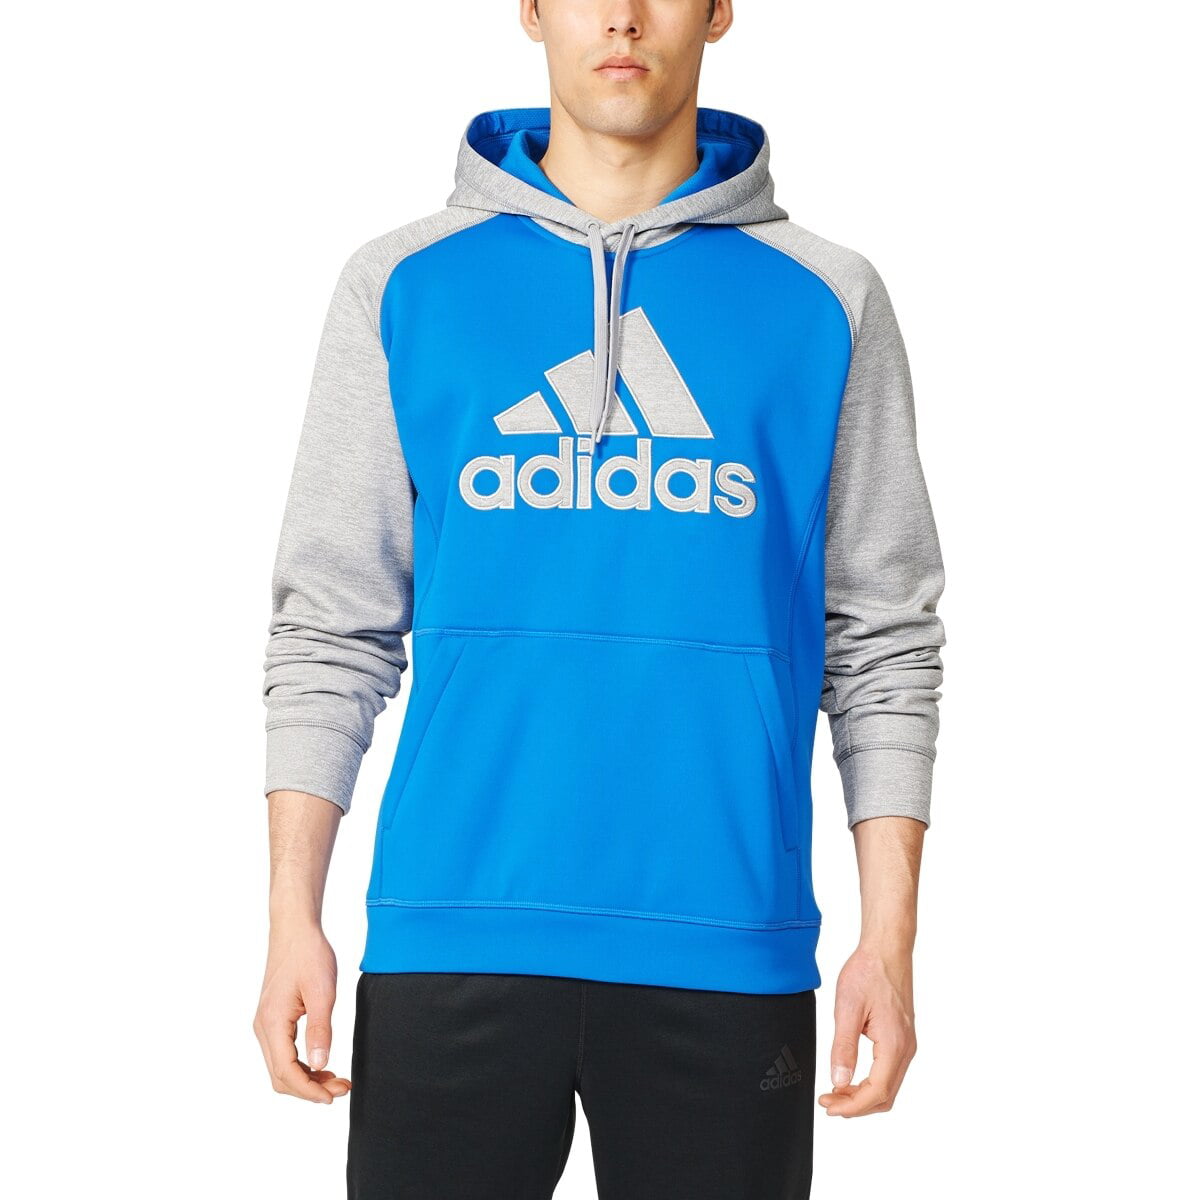 adidas grey and blue hoodie